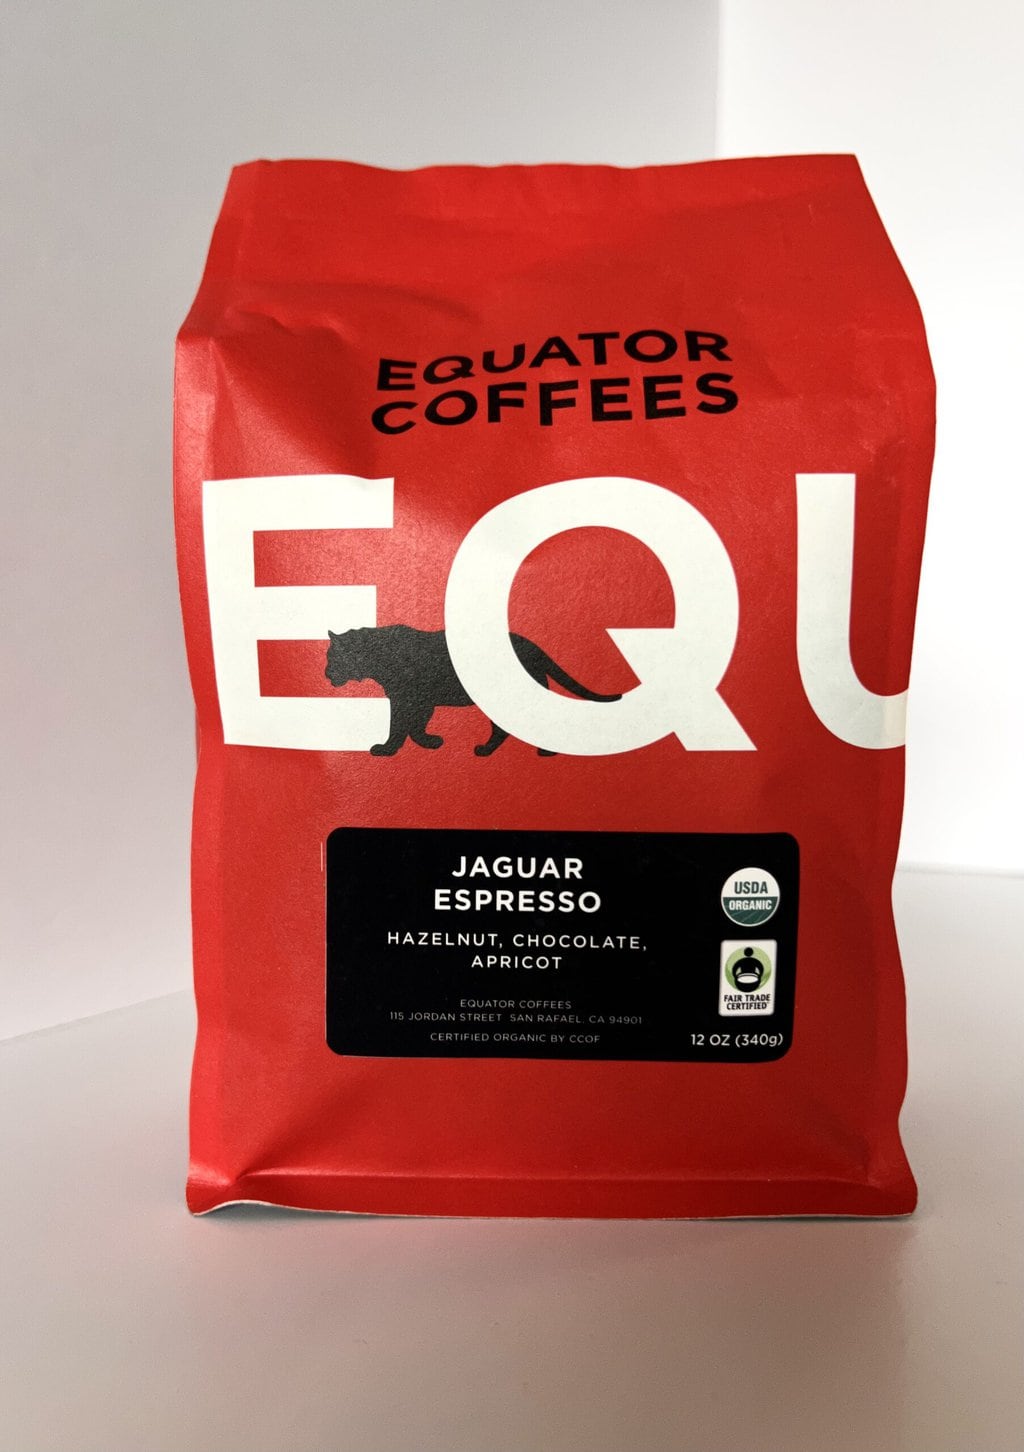 Equator Coffees pack of Jaguar Espresso Fair Trade Organic